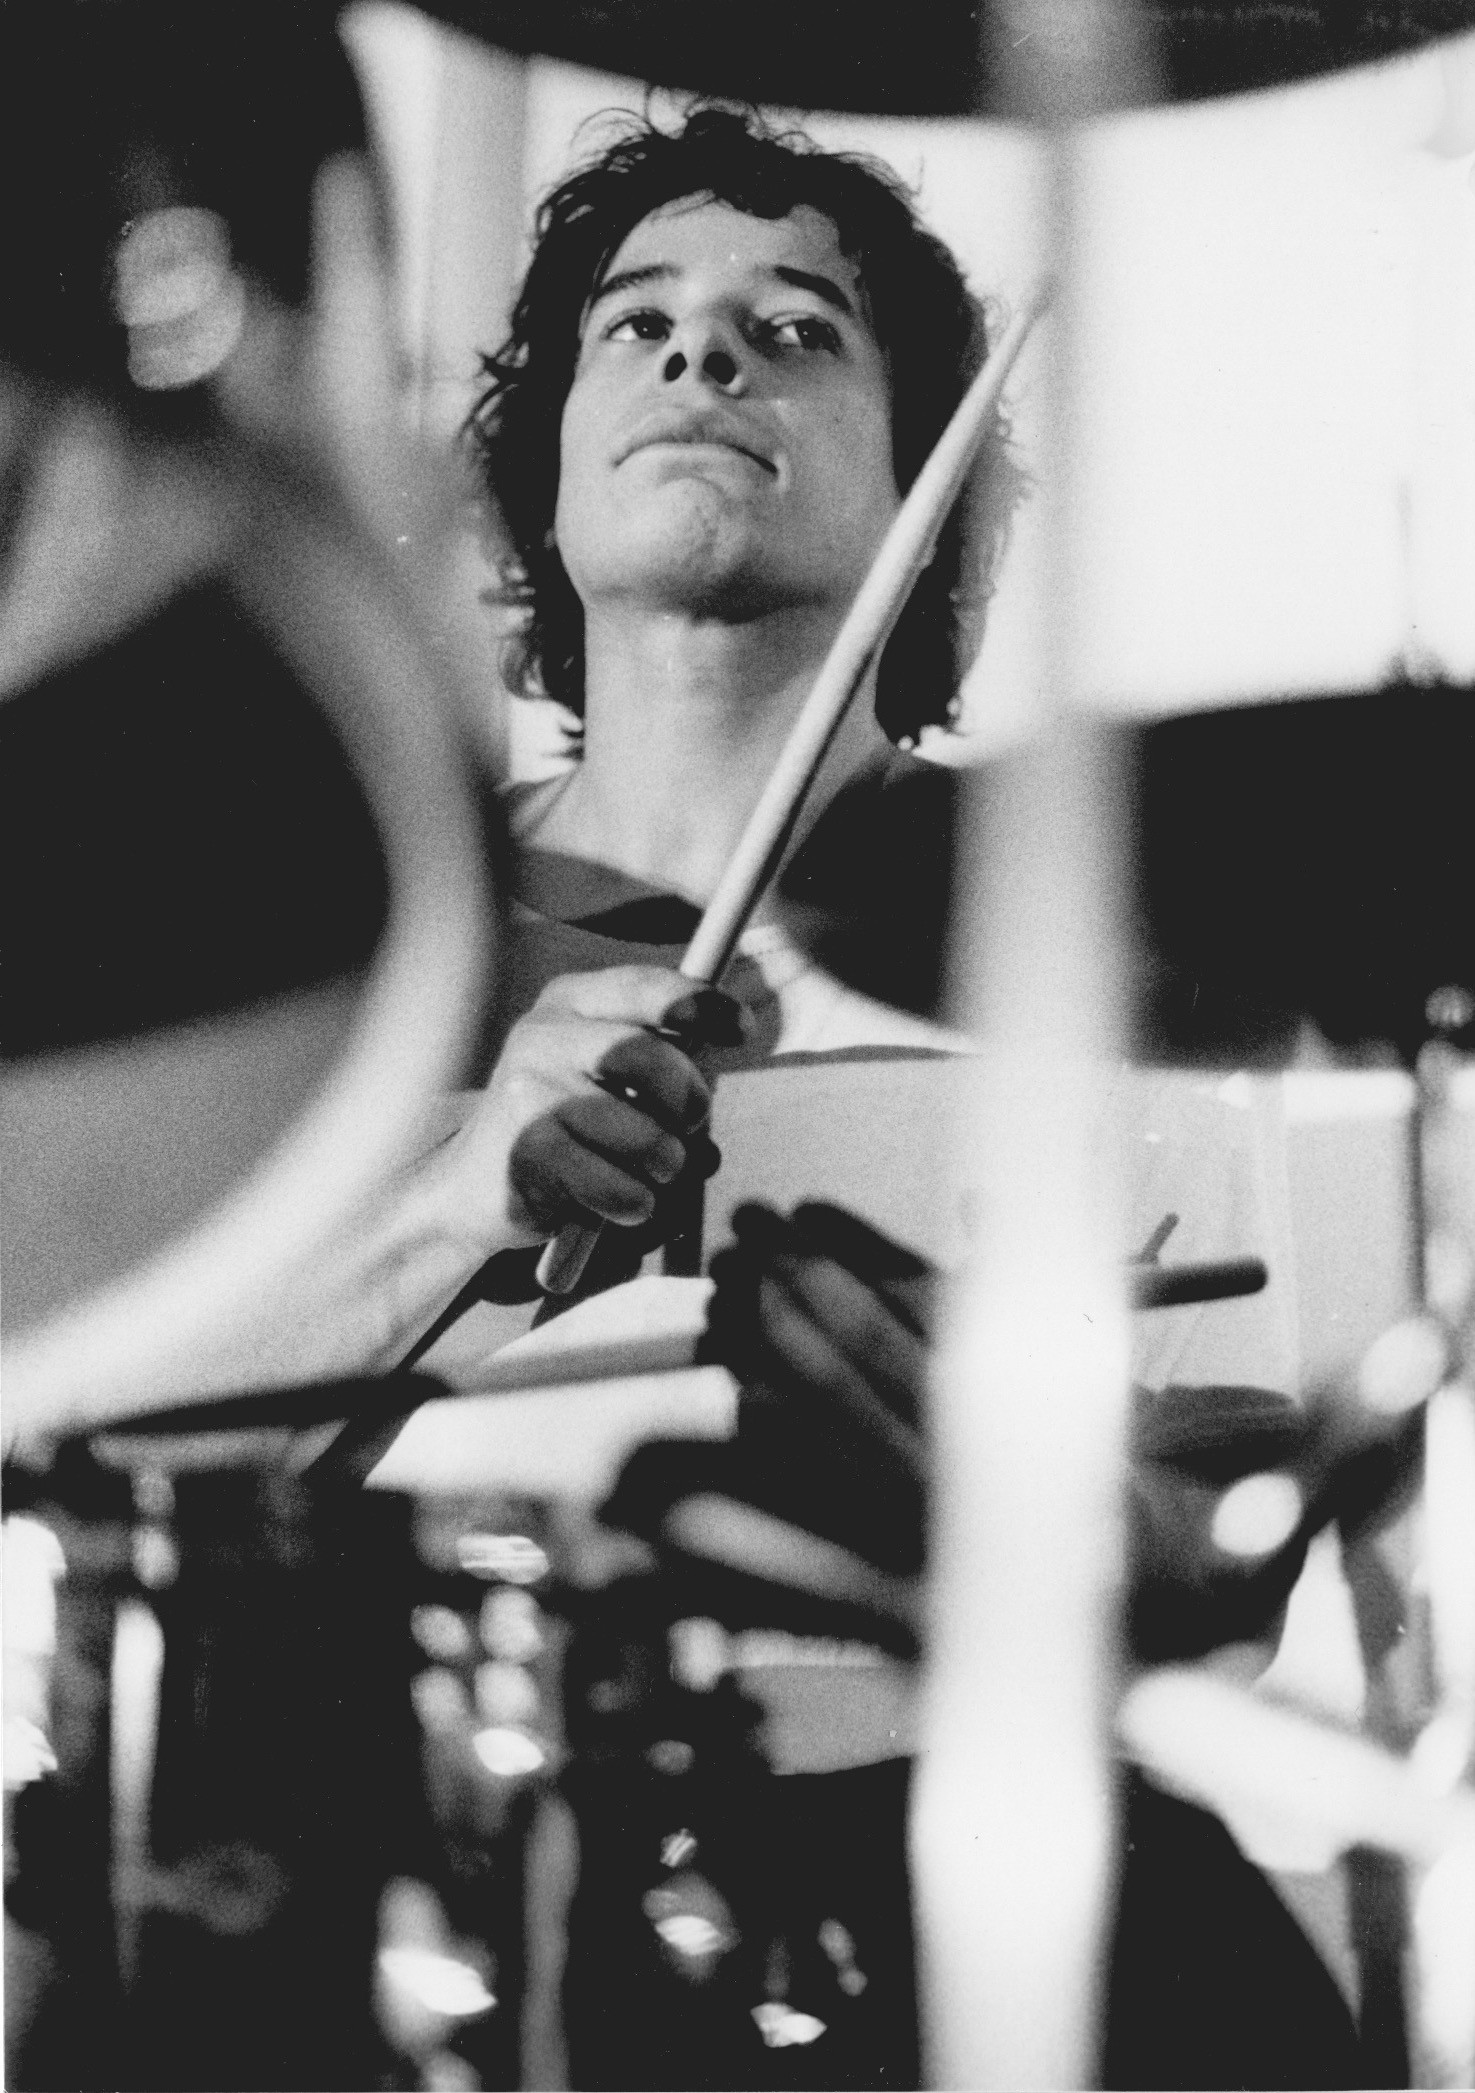 Mike Laurent drums